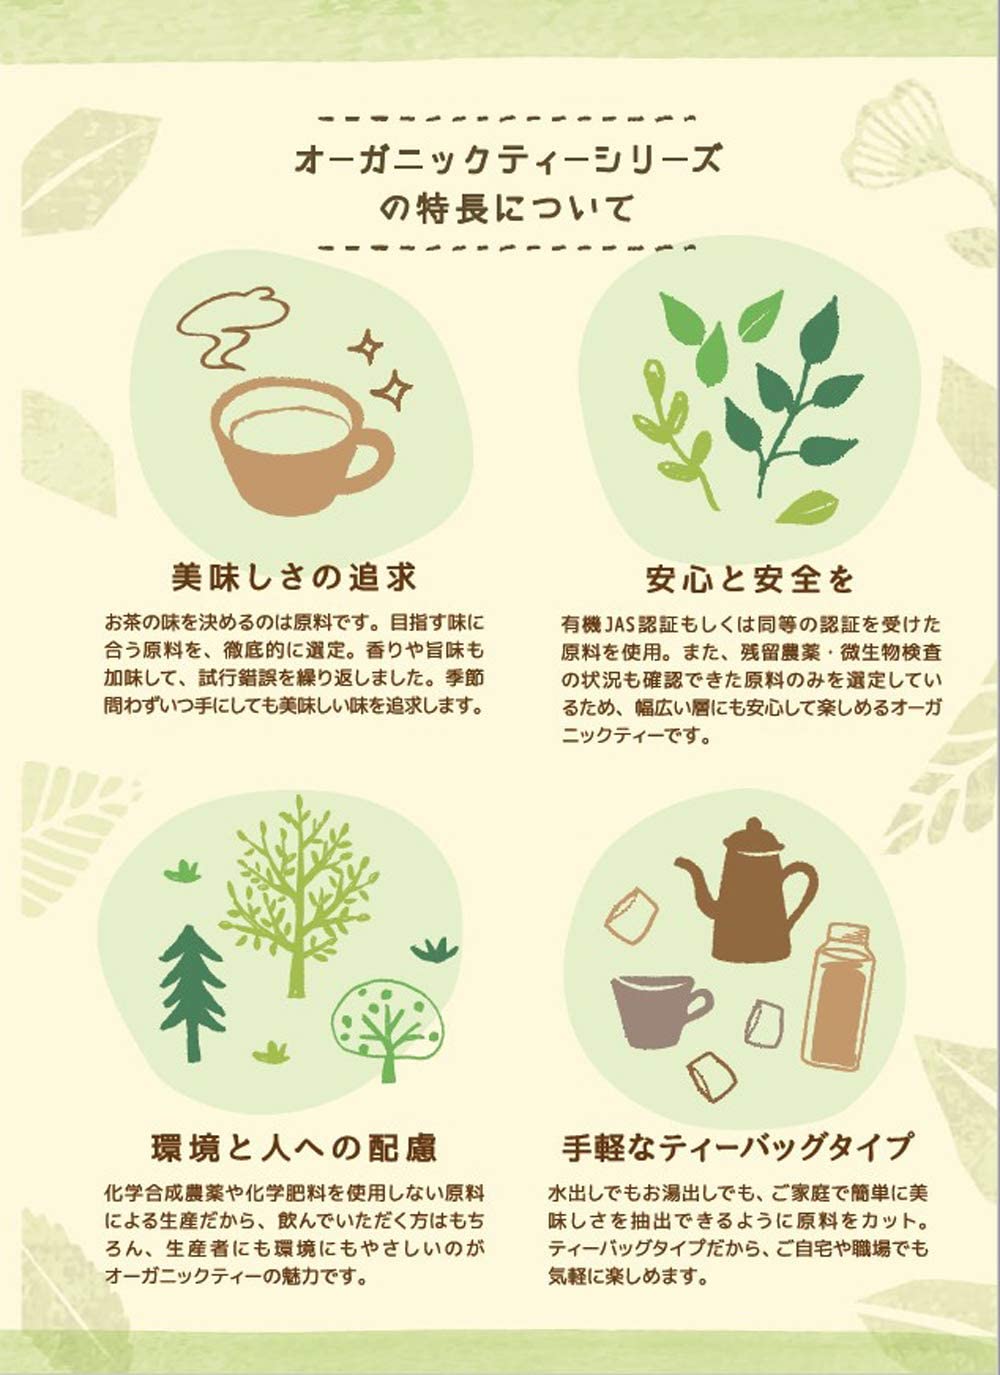 Tokyo Tea Trading Organic Hojicha 20P x 4 Packs by Mug&amp;Pot - NihonMura